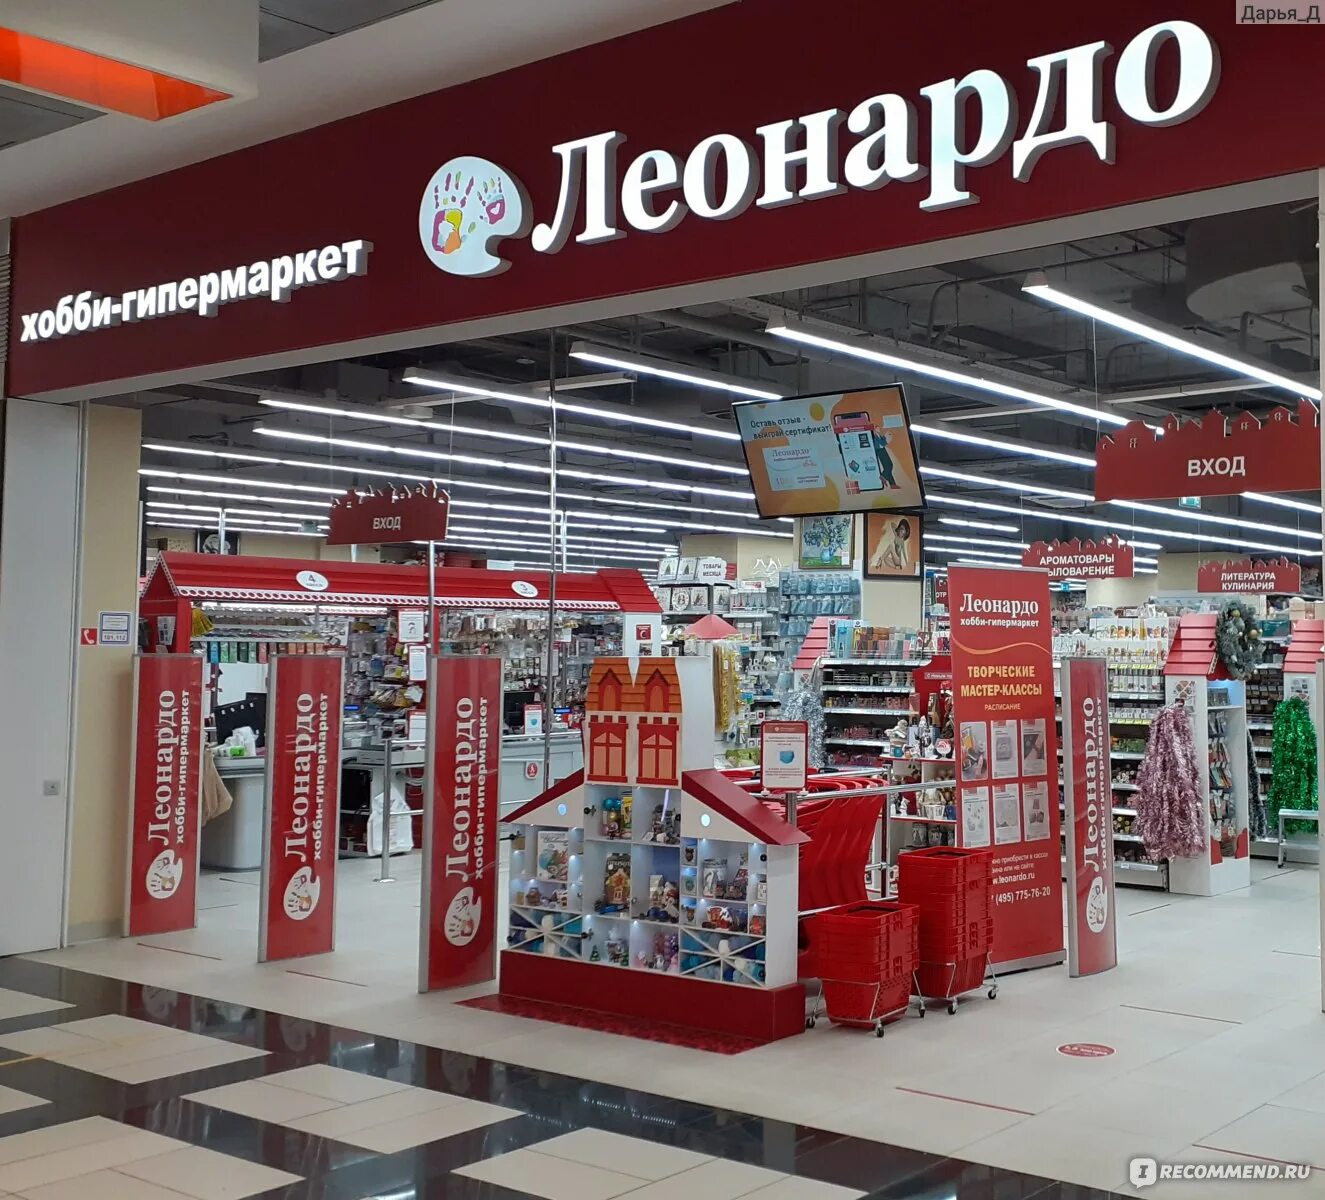 Леонардо сайт магазина москва. Леонардо магазин. Леонардо хобби гипермаркет магазины Москва.